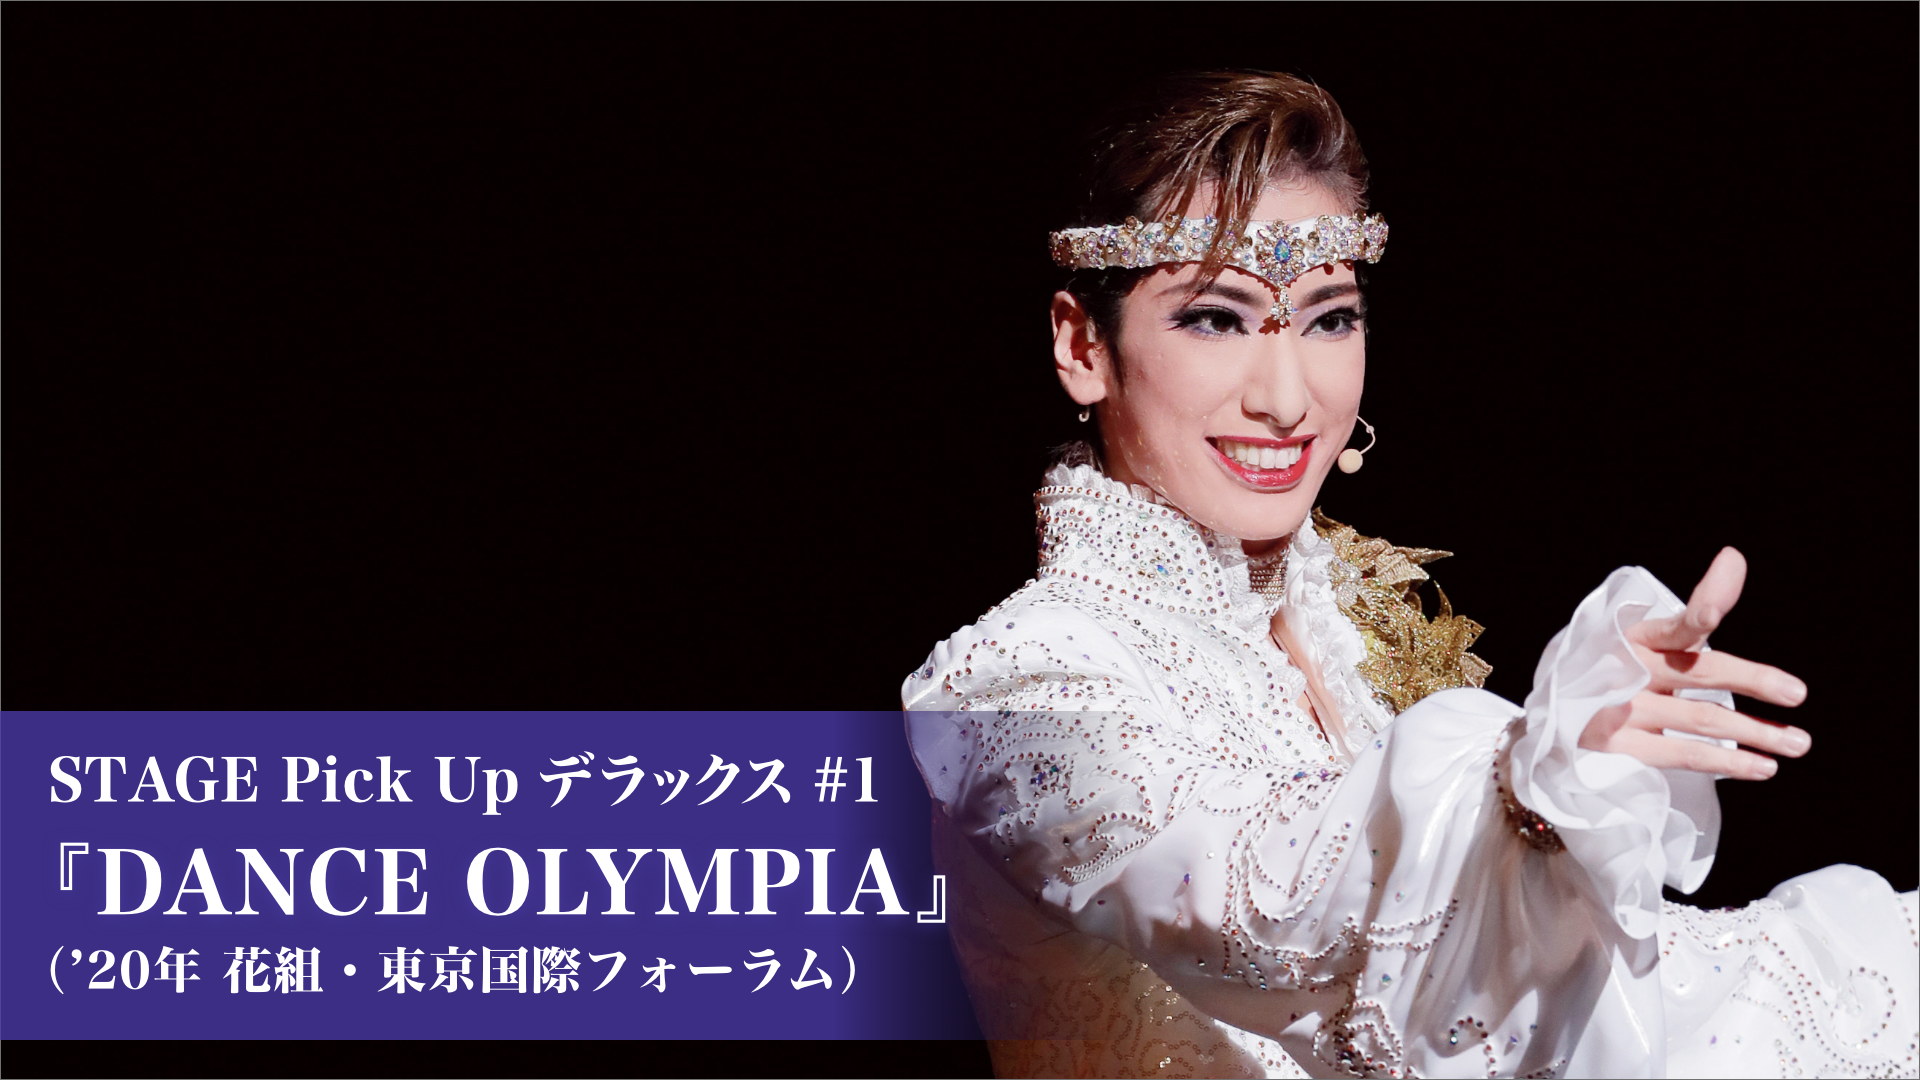 STAGE Pick Up デラックス #1『DANCE OLYMPIA』（'20年花組・東京国際 